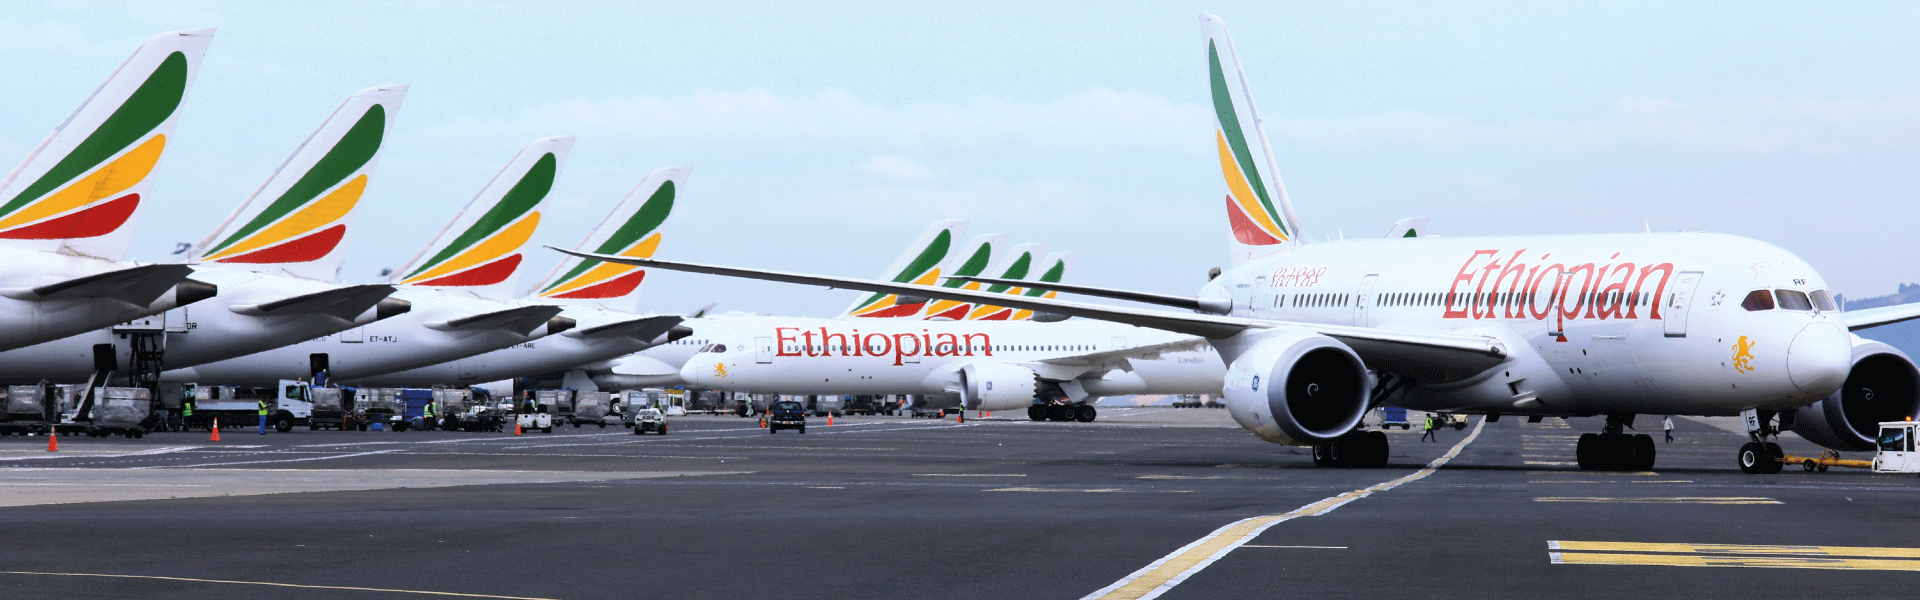 Ethiopian Airlines Ground Planes